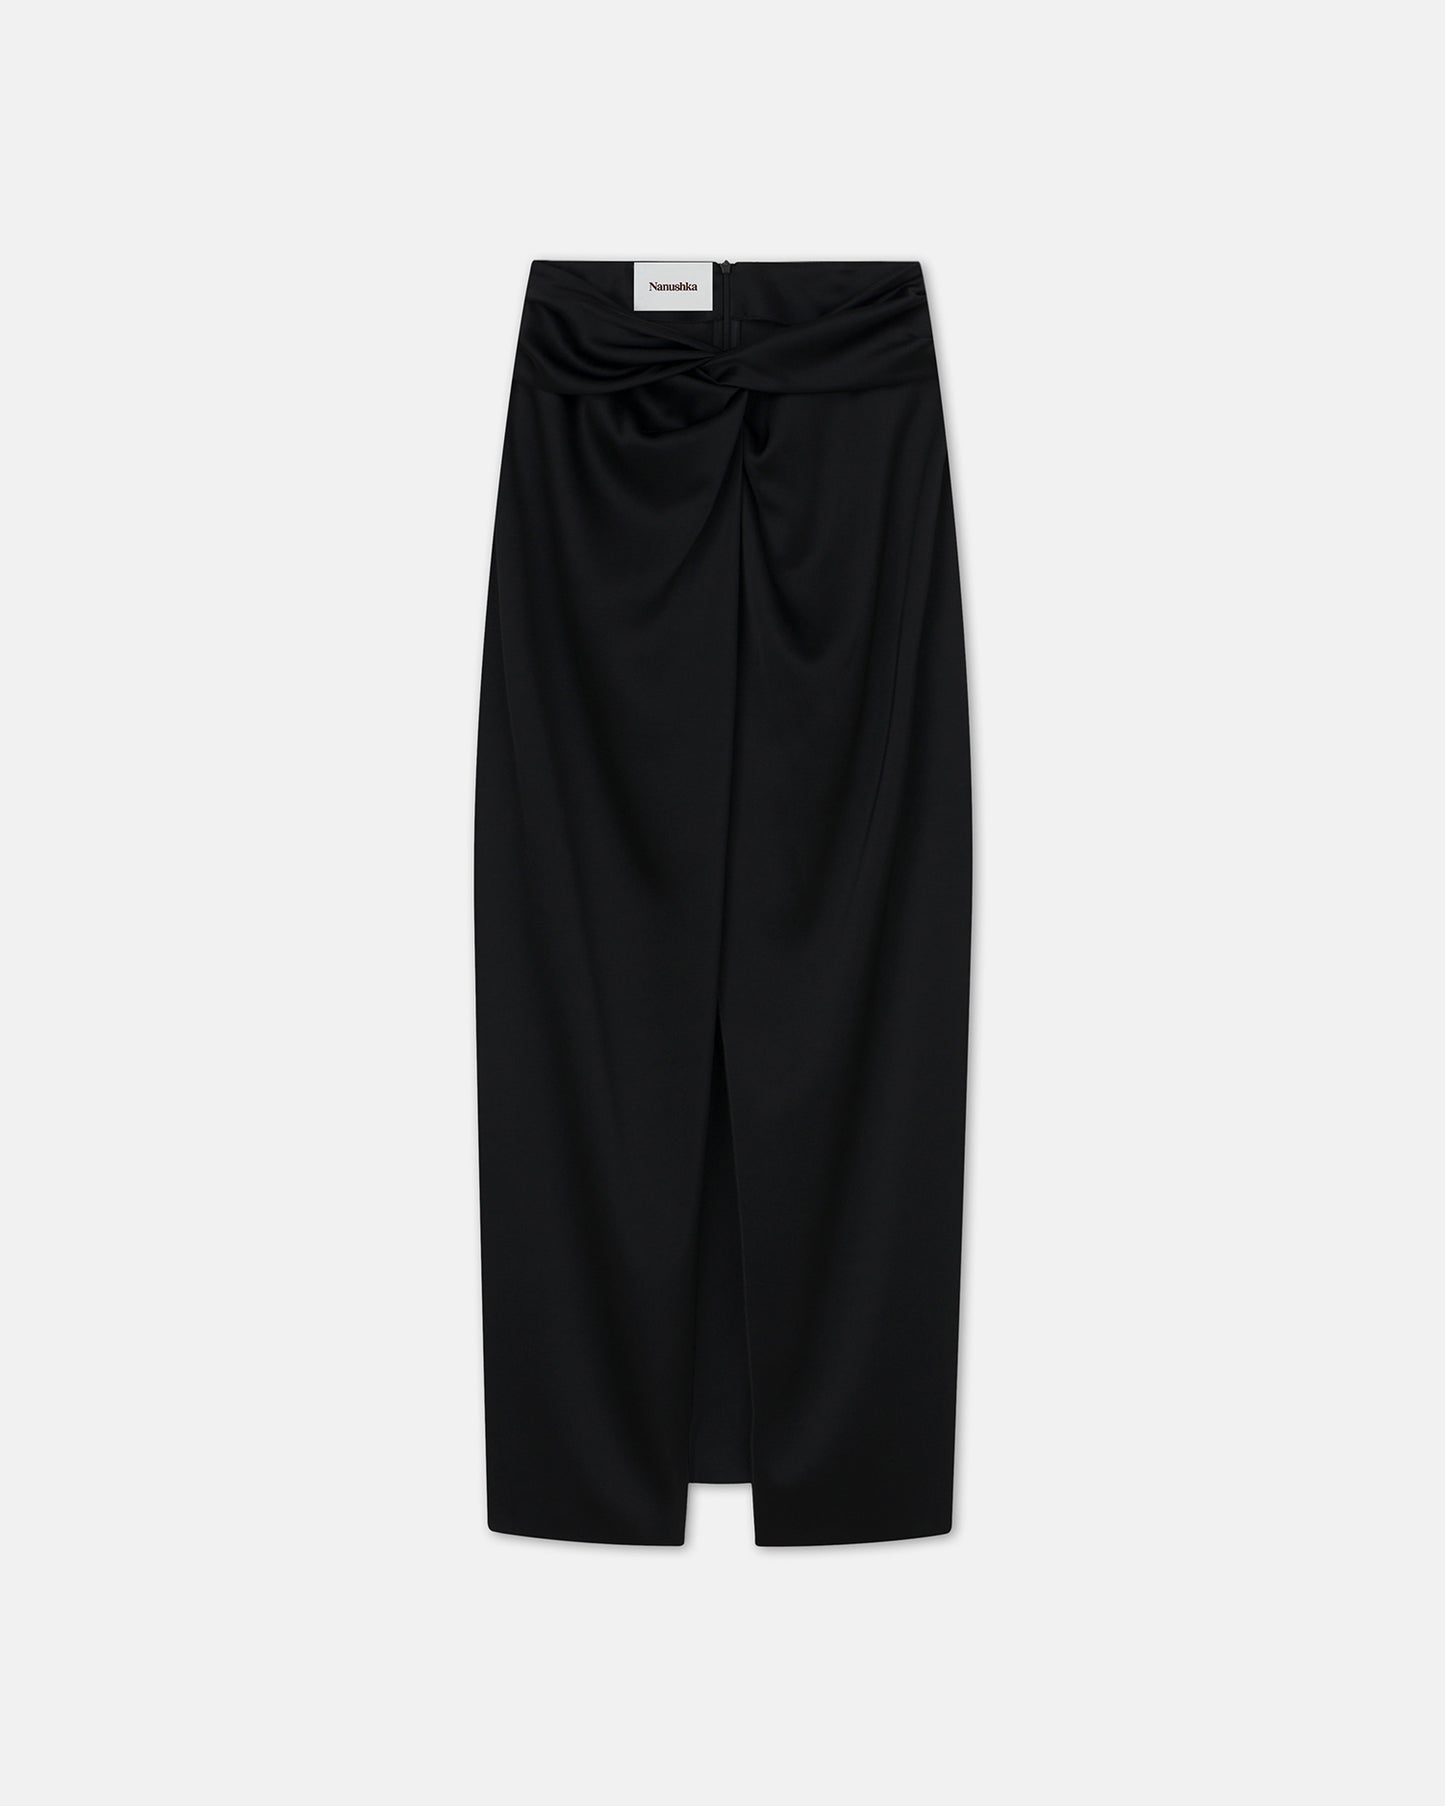 Heida - Slip Satin Wrap Skirt - Black